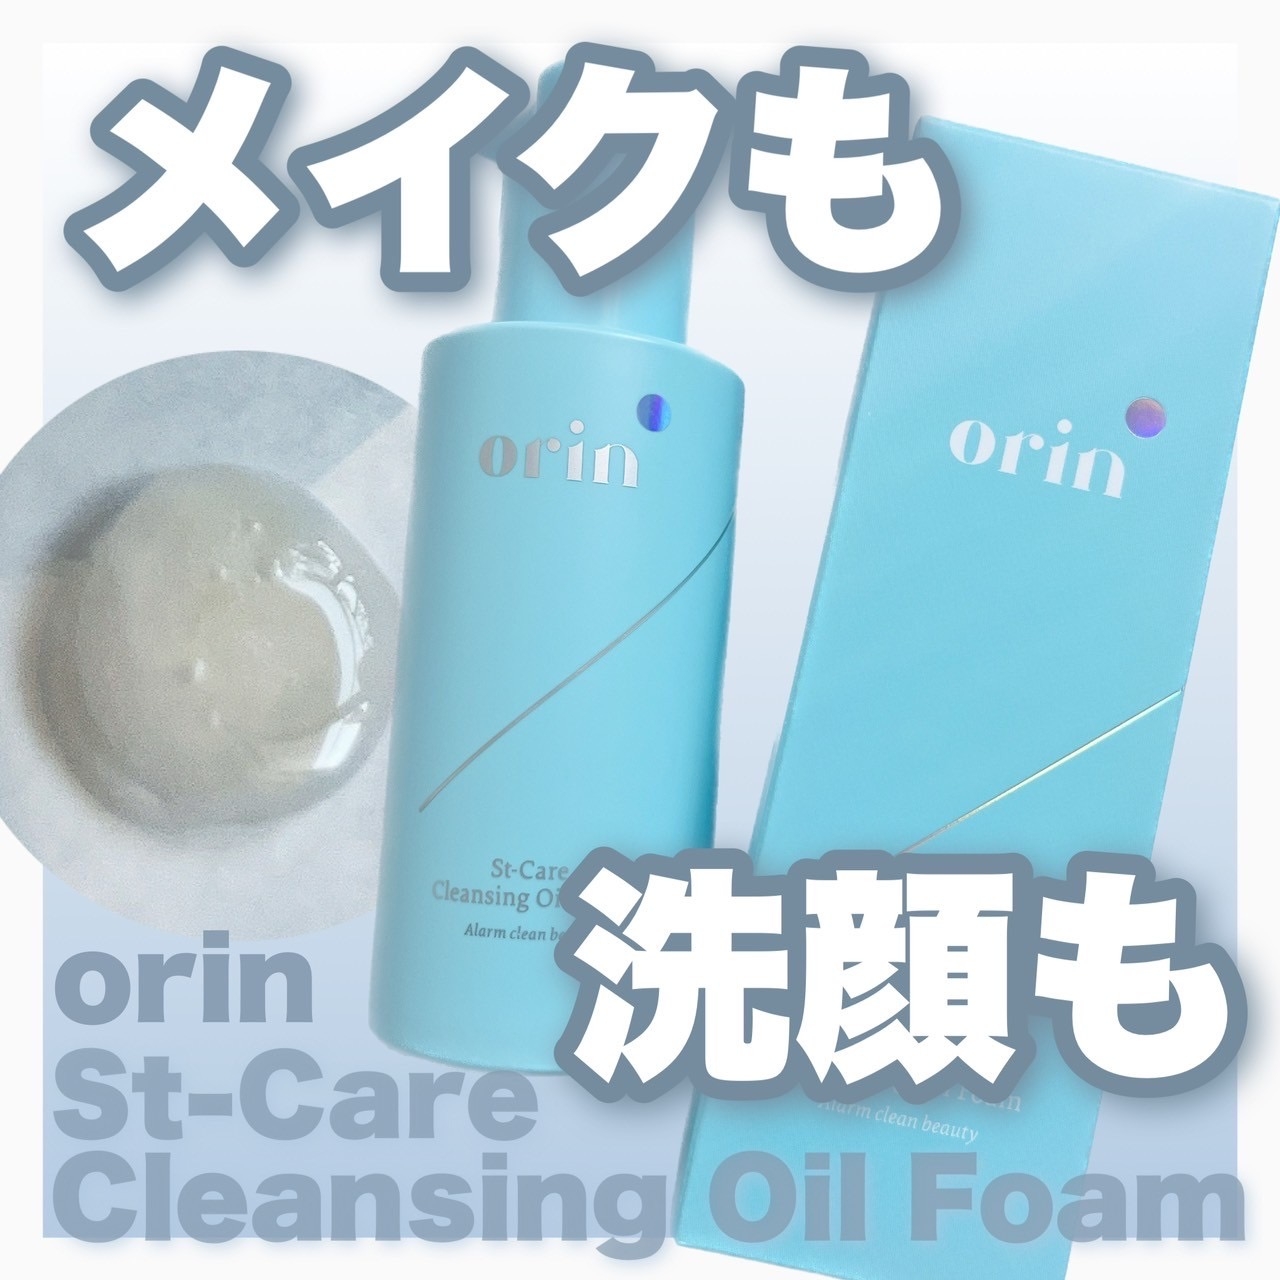 orinSt-Care Cleansing Oil Foamを使ったまみやこさんのクチコミ画像1